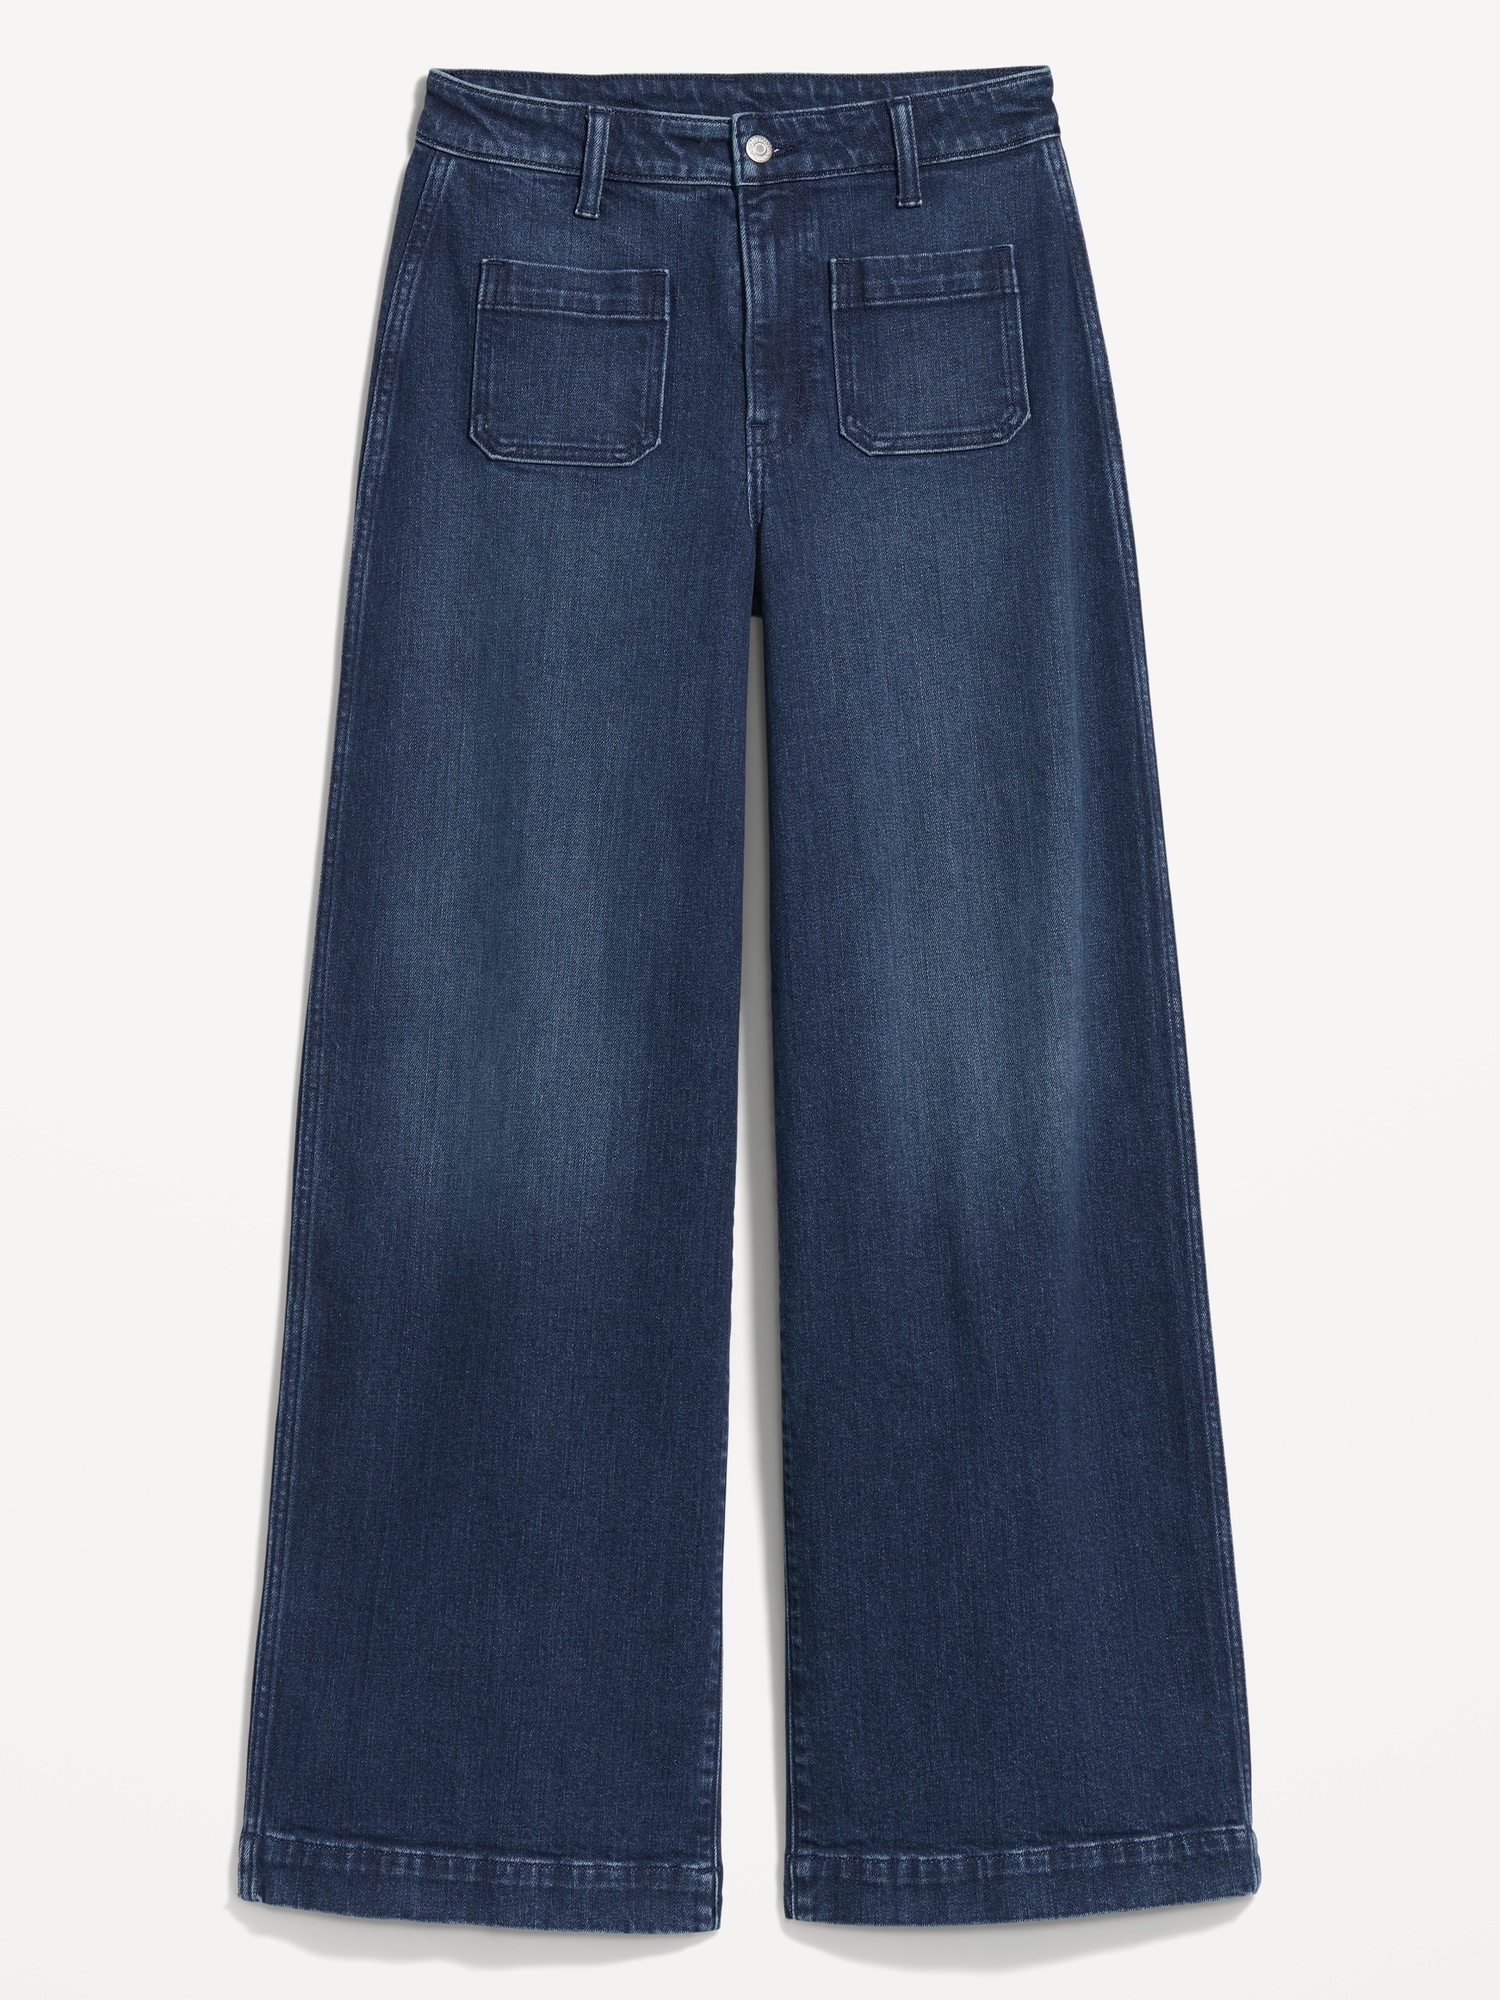 High Waist Denim Pants Blue Jeans Women's Peg Leg Jeans Trousers